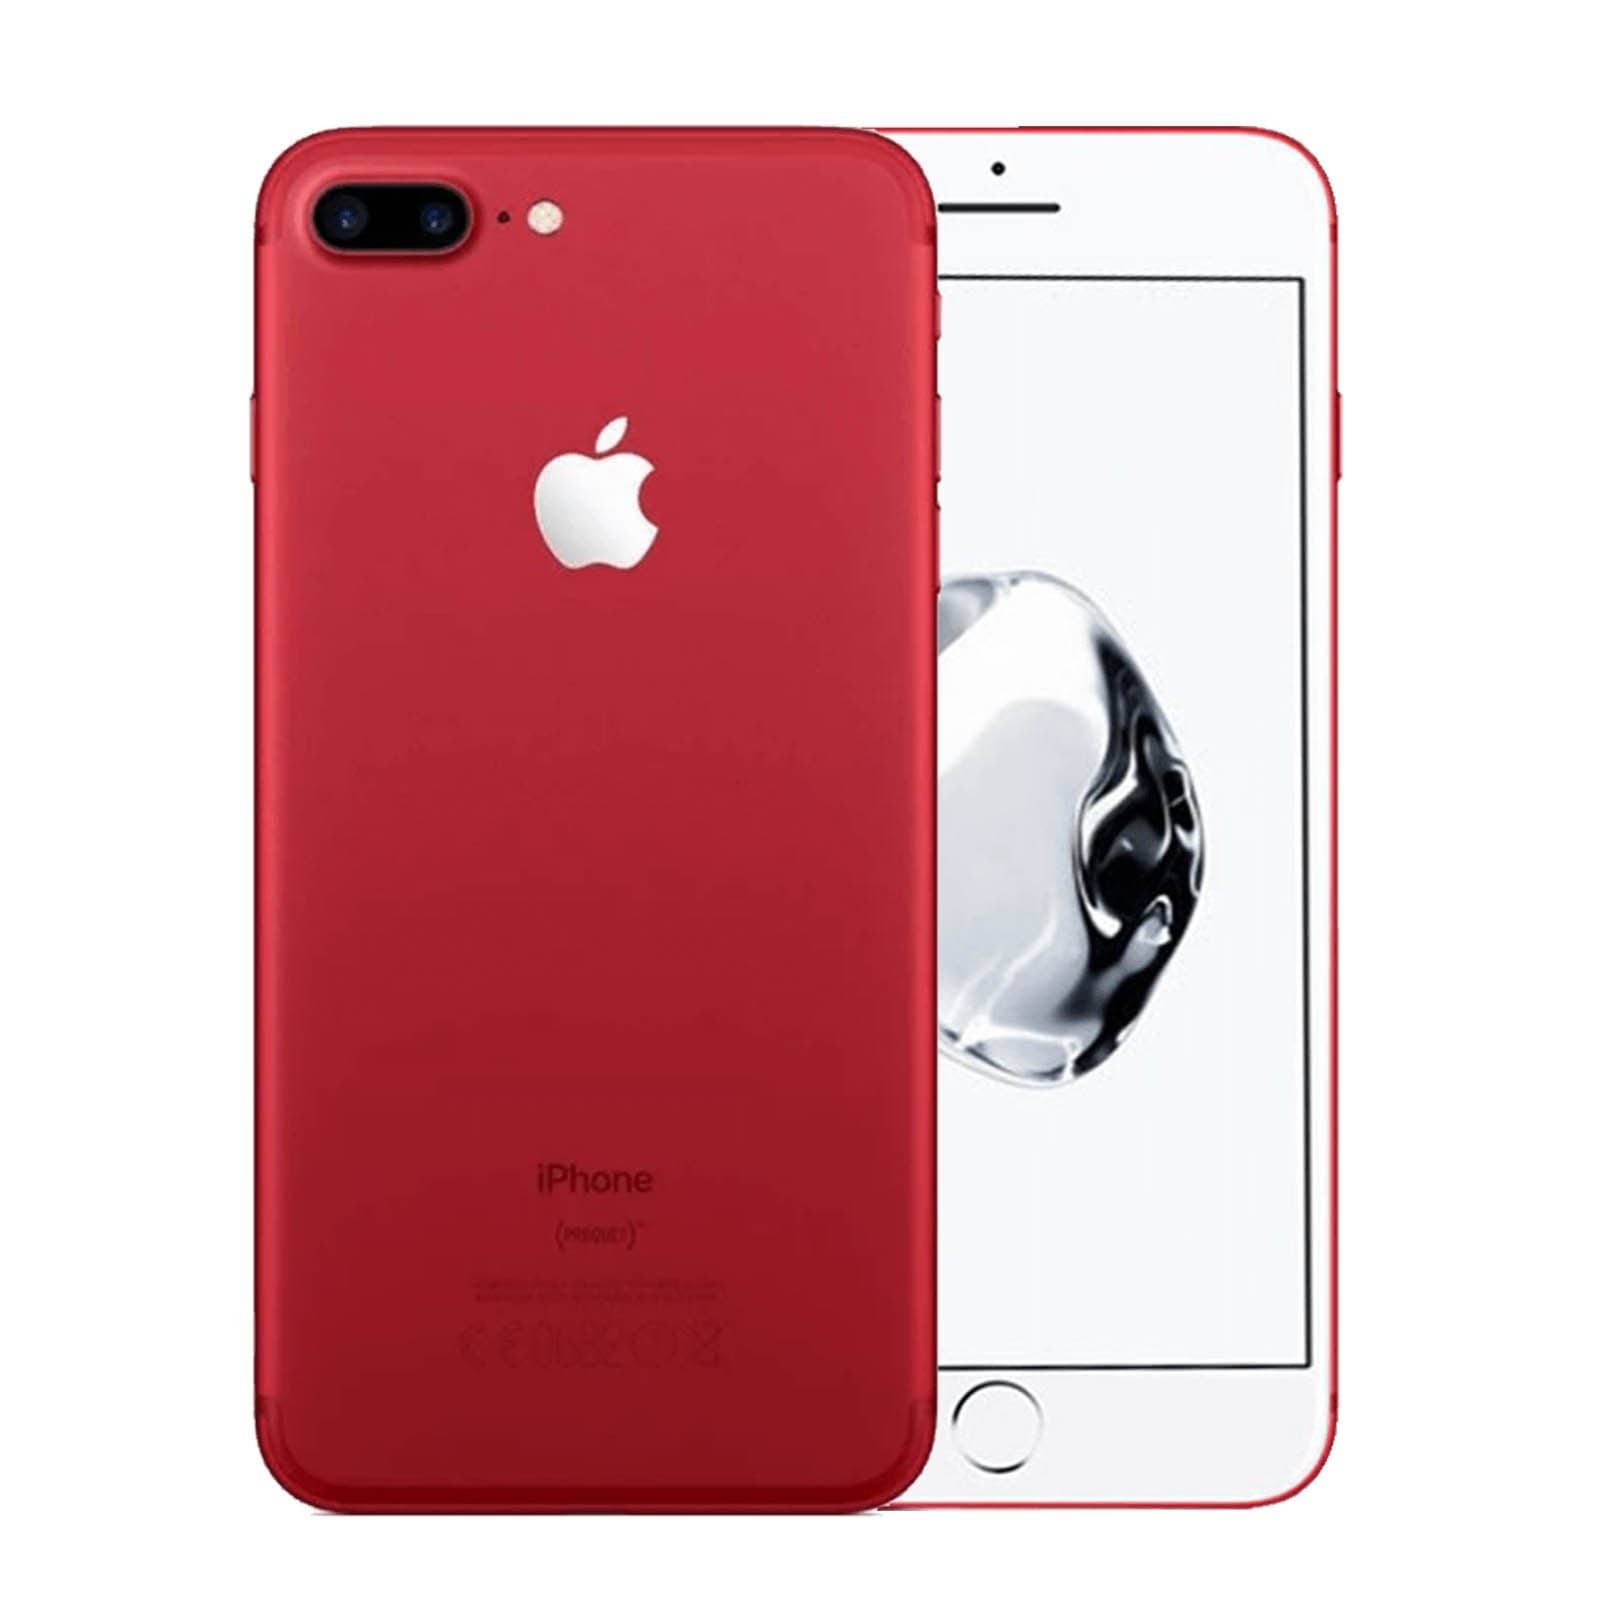 Apple iPhone 7 Plus 128GB Product Red Pristine - Unlocked 128GB Product Red Pristine